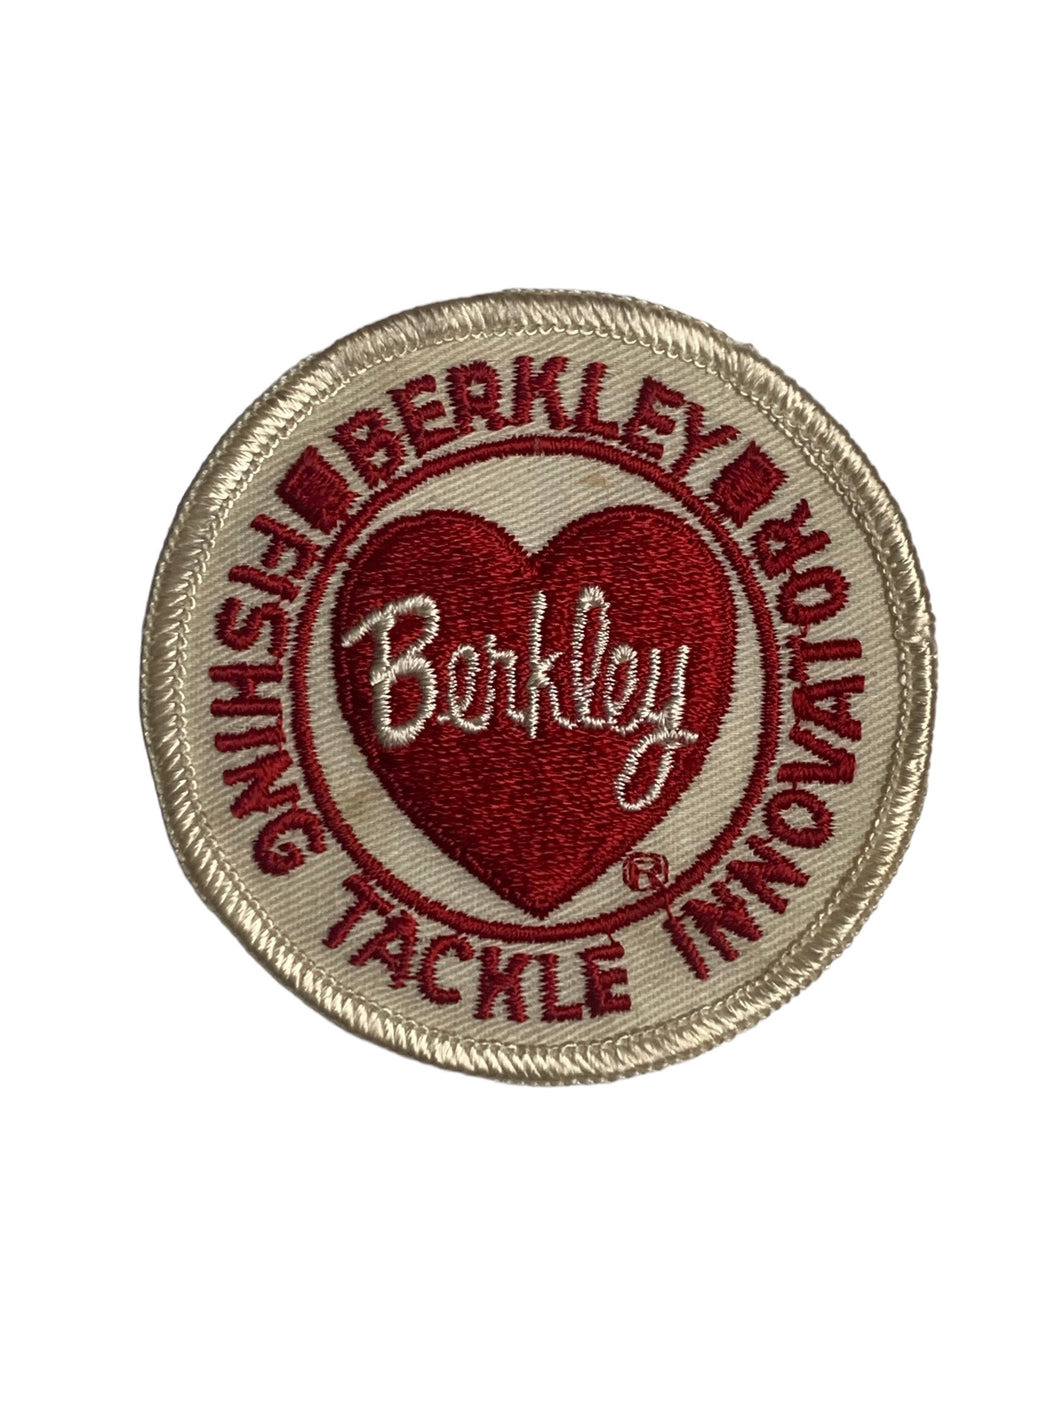 BERKLEY INNOVATOR FISHING TACKLE Vintage Patch 